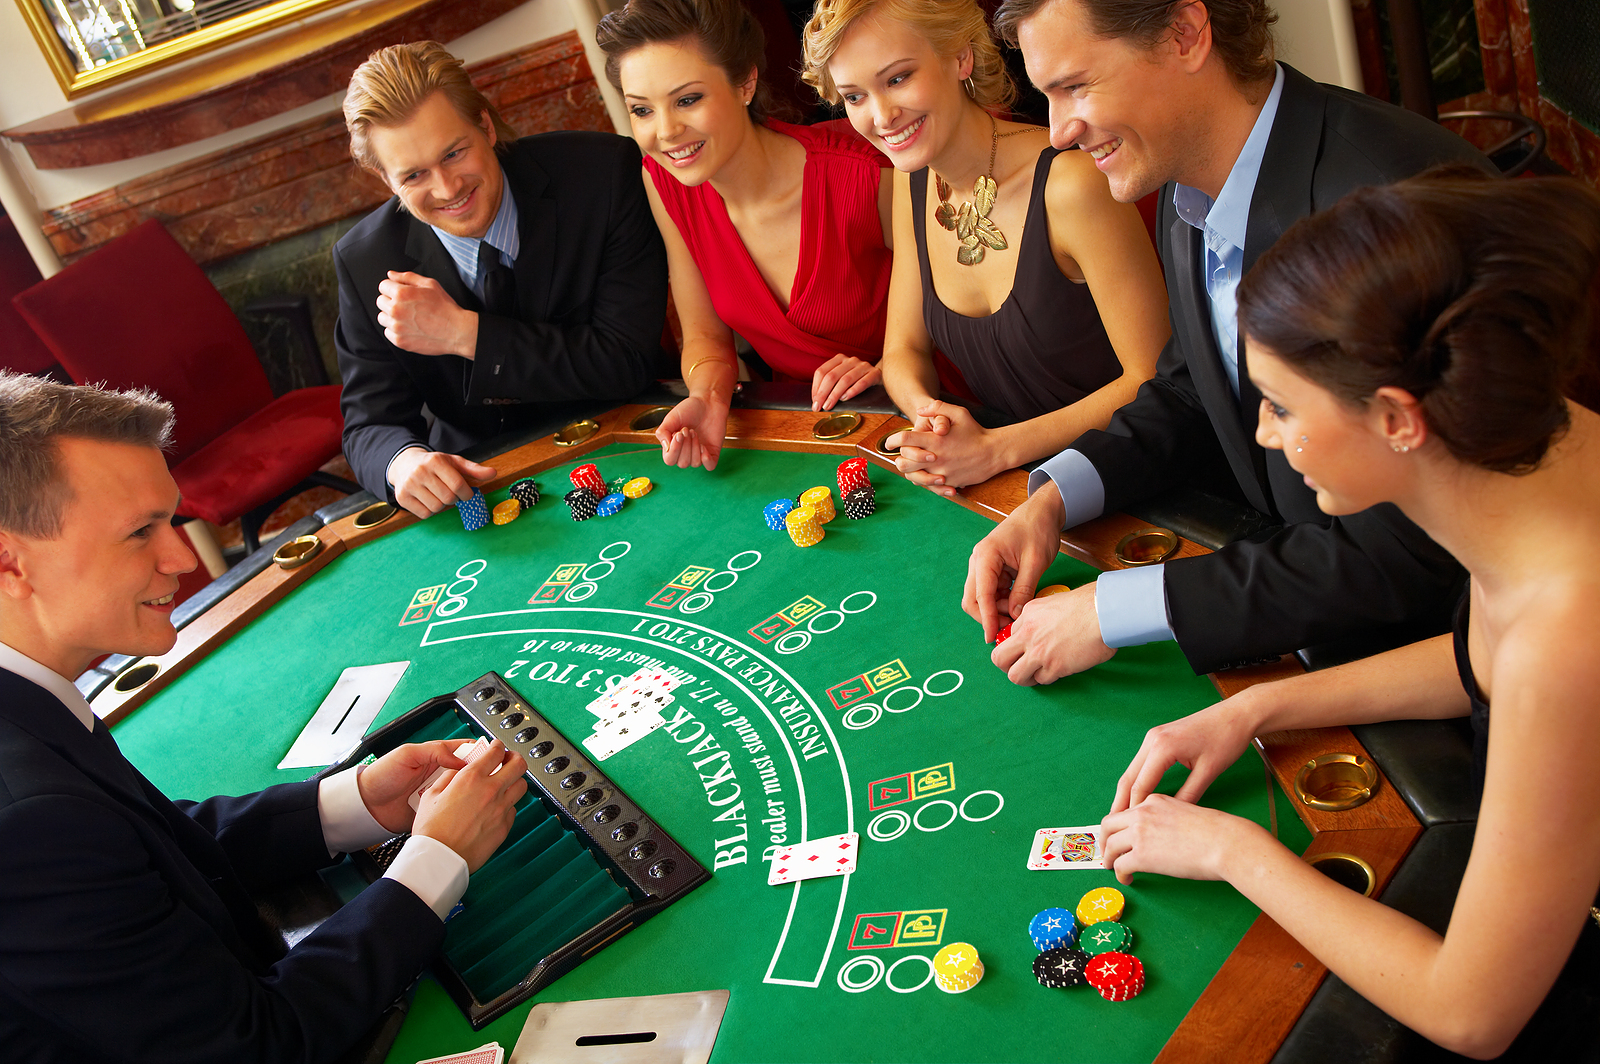 Online poker casino bet it all казино отзывы